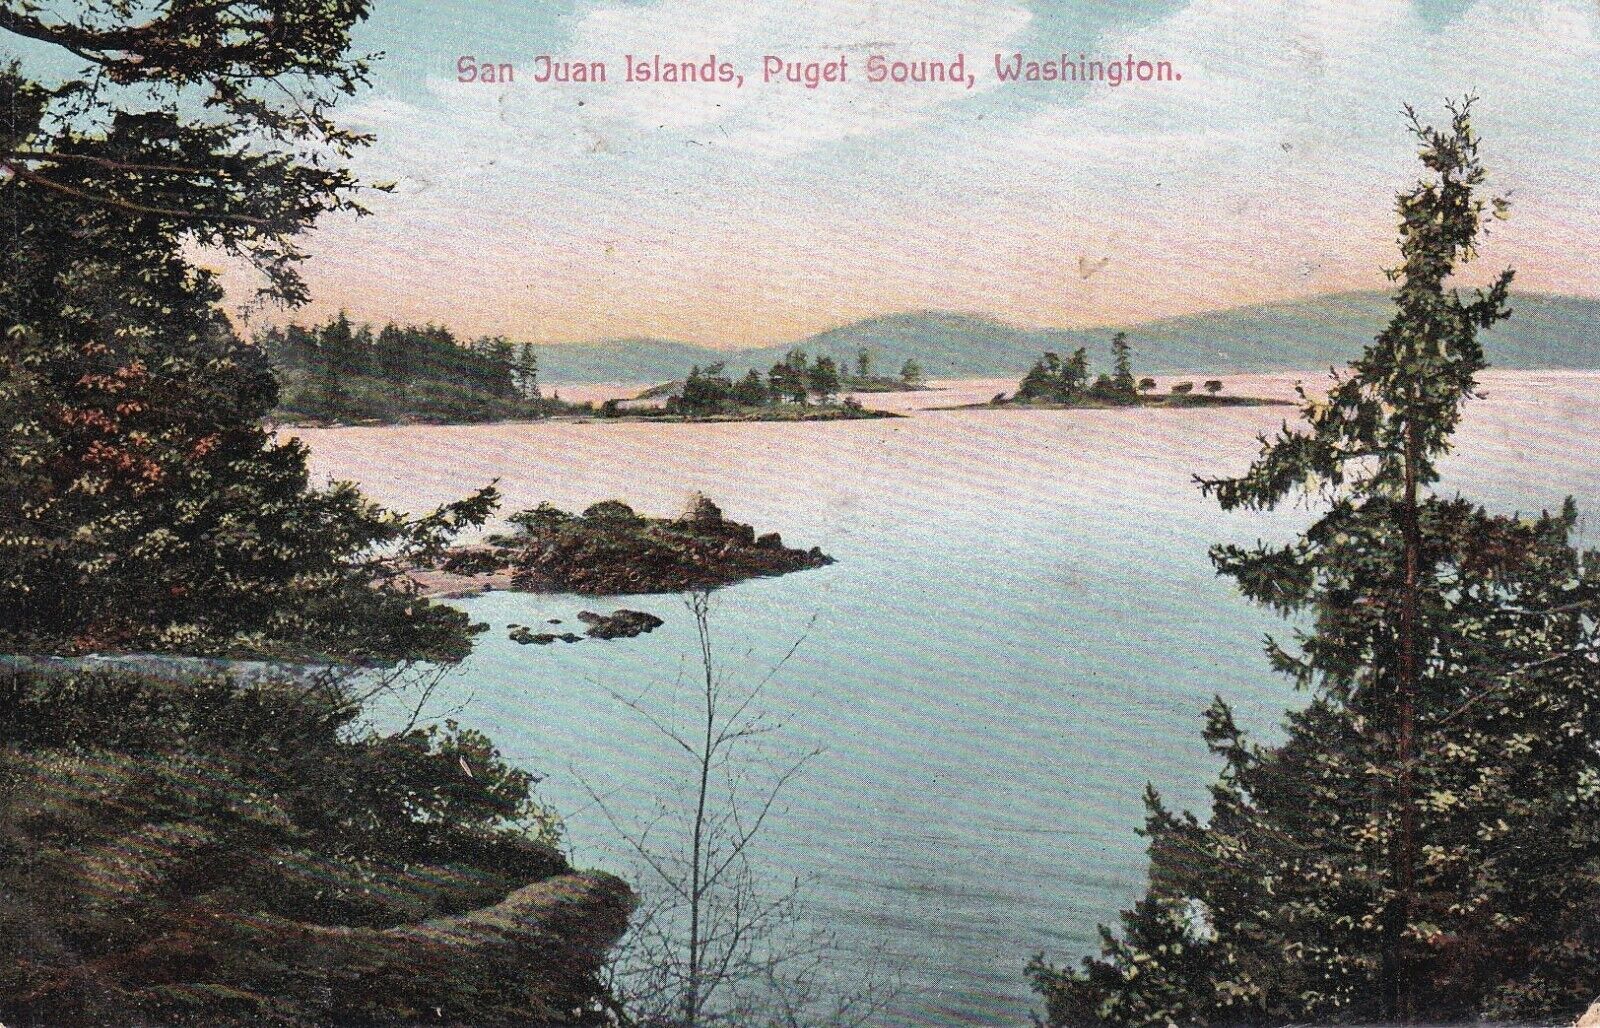 VINTAGE POSTCARD WASHINGTON SAN JUAN ISLANDS PUGET SOUNDS 1910s DB POSTMARK 1908